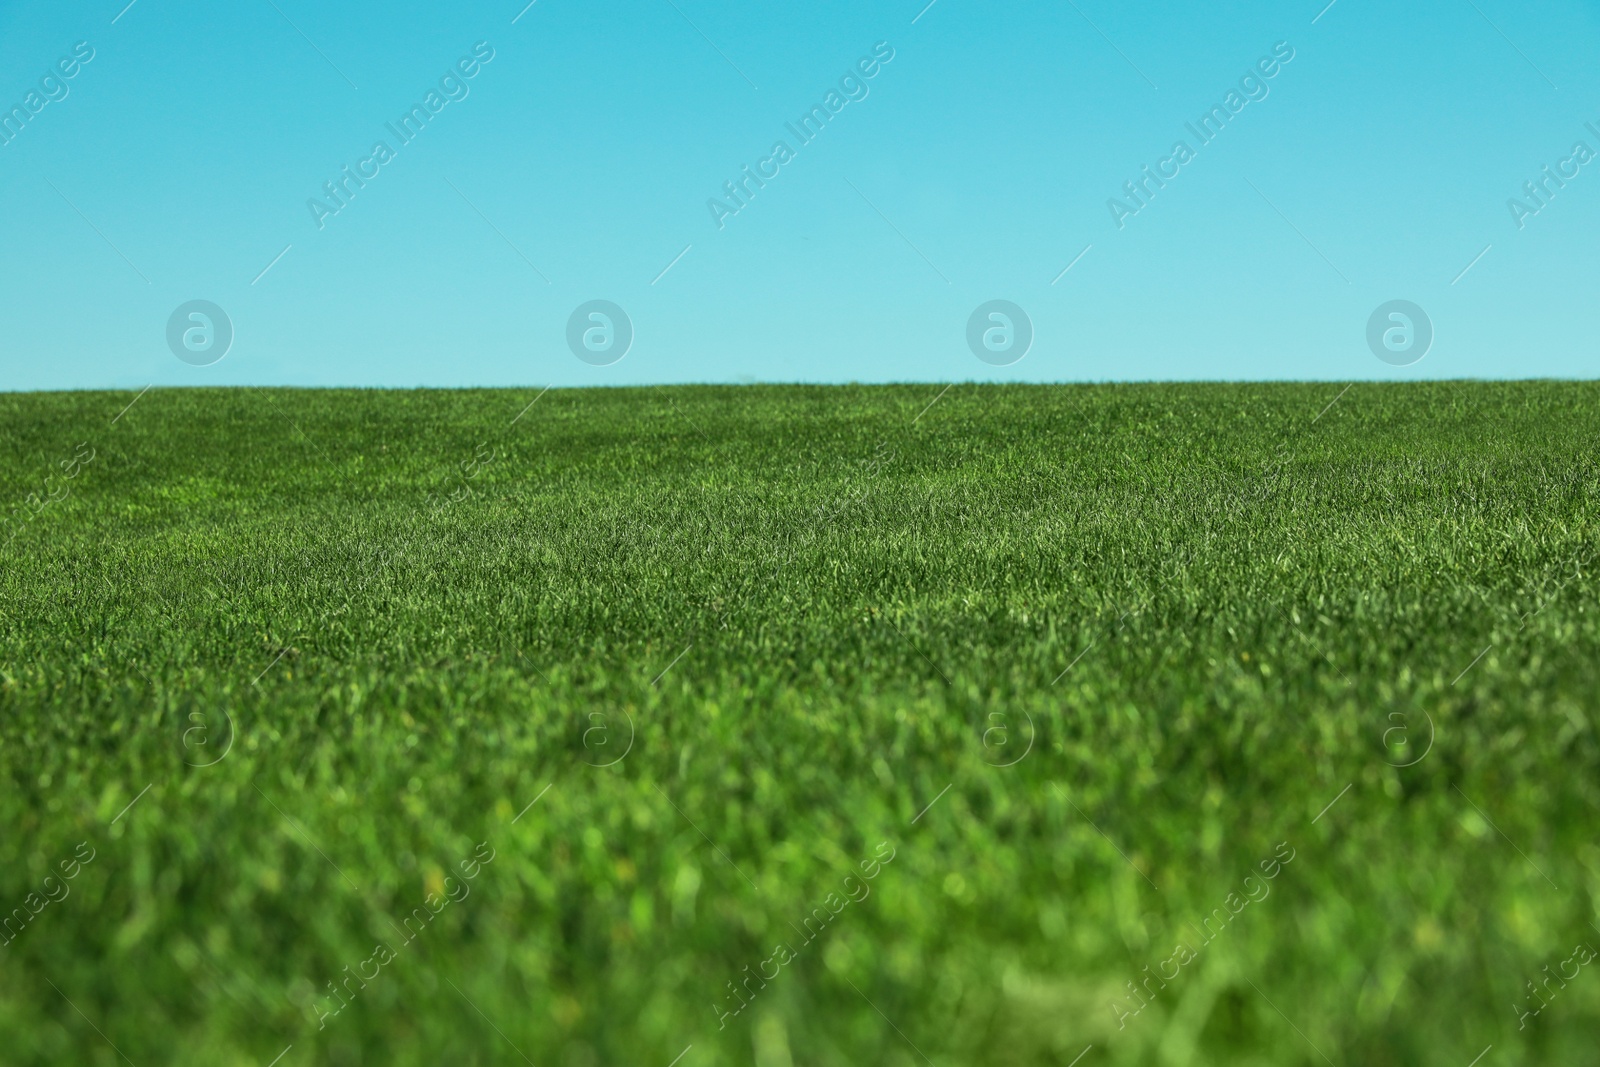 Photo of Fresh green grass growing under blue sky outdoors